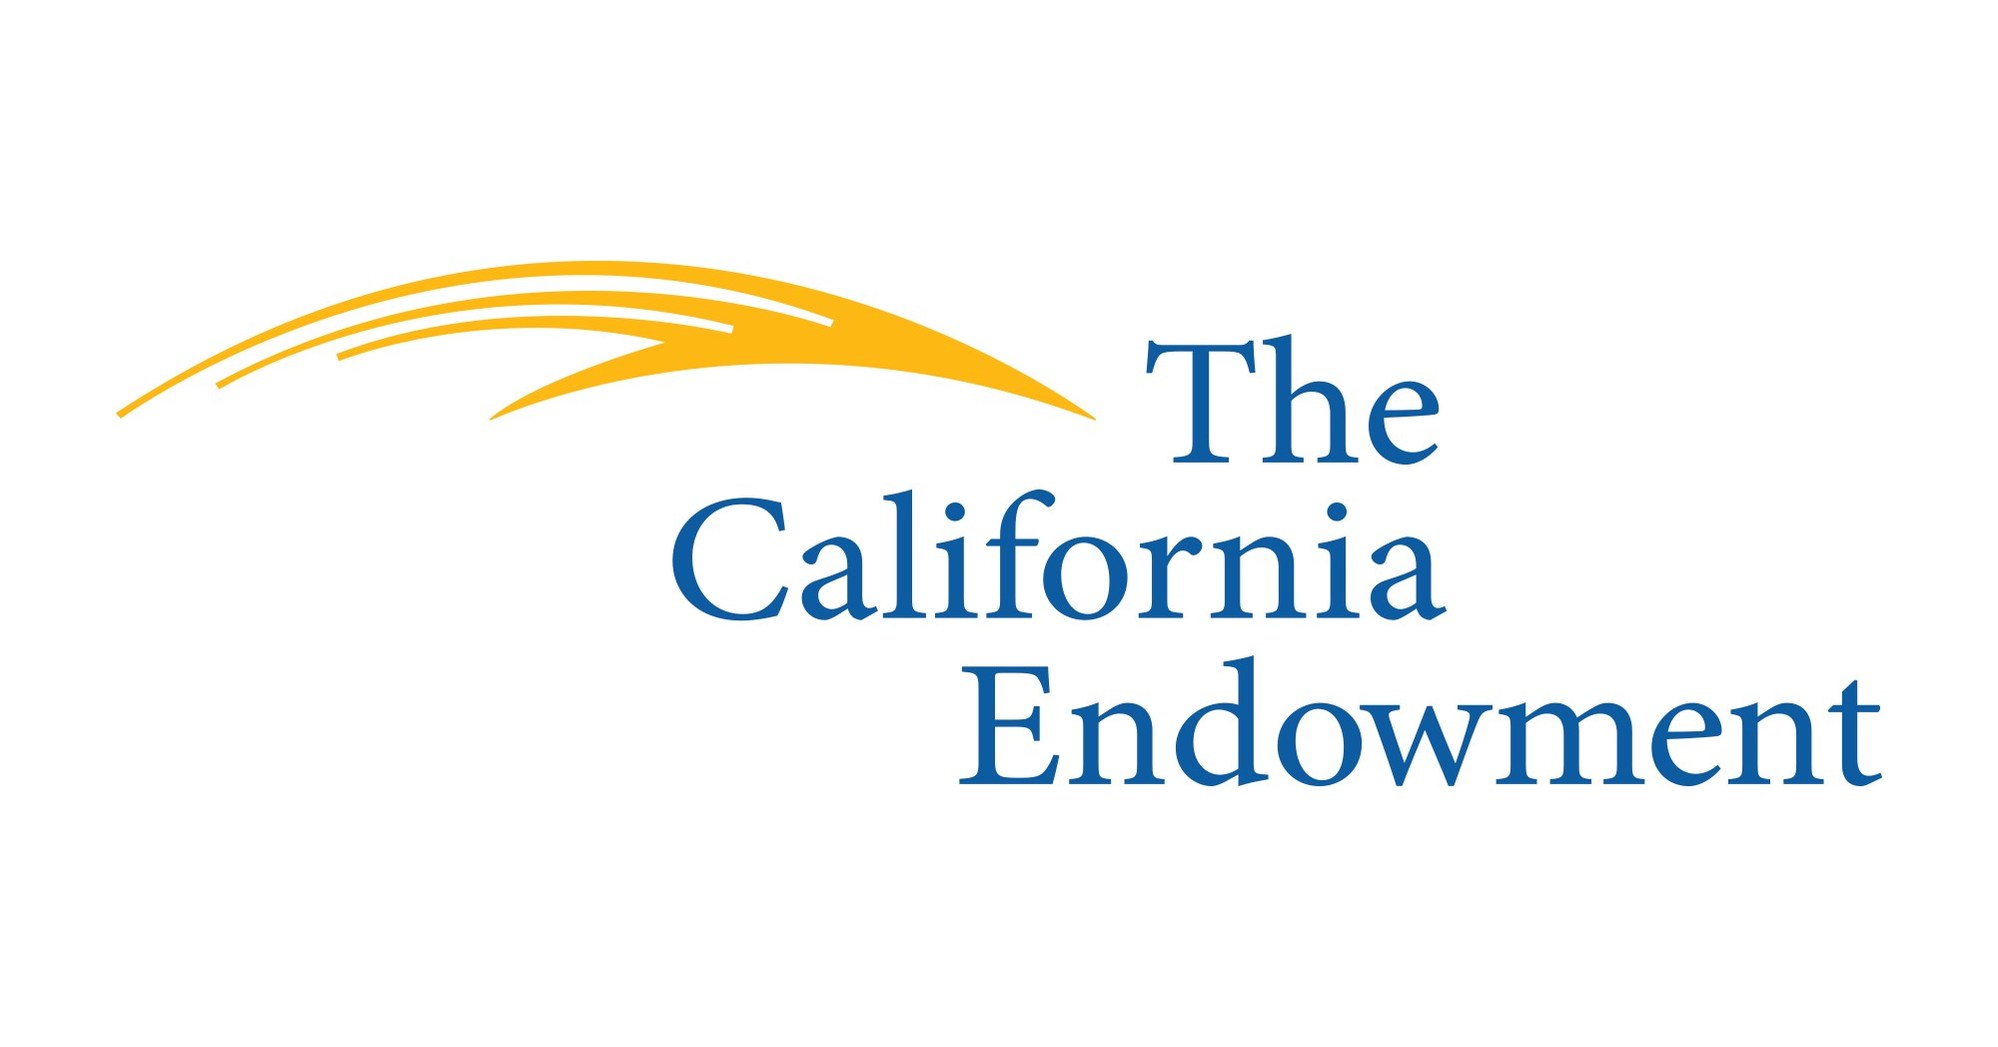 The Calfiornia Endowment